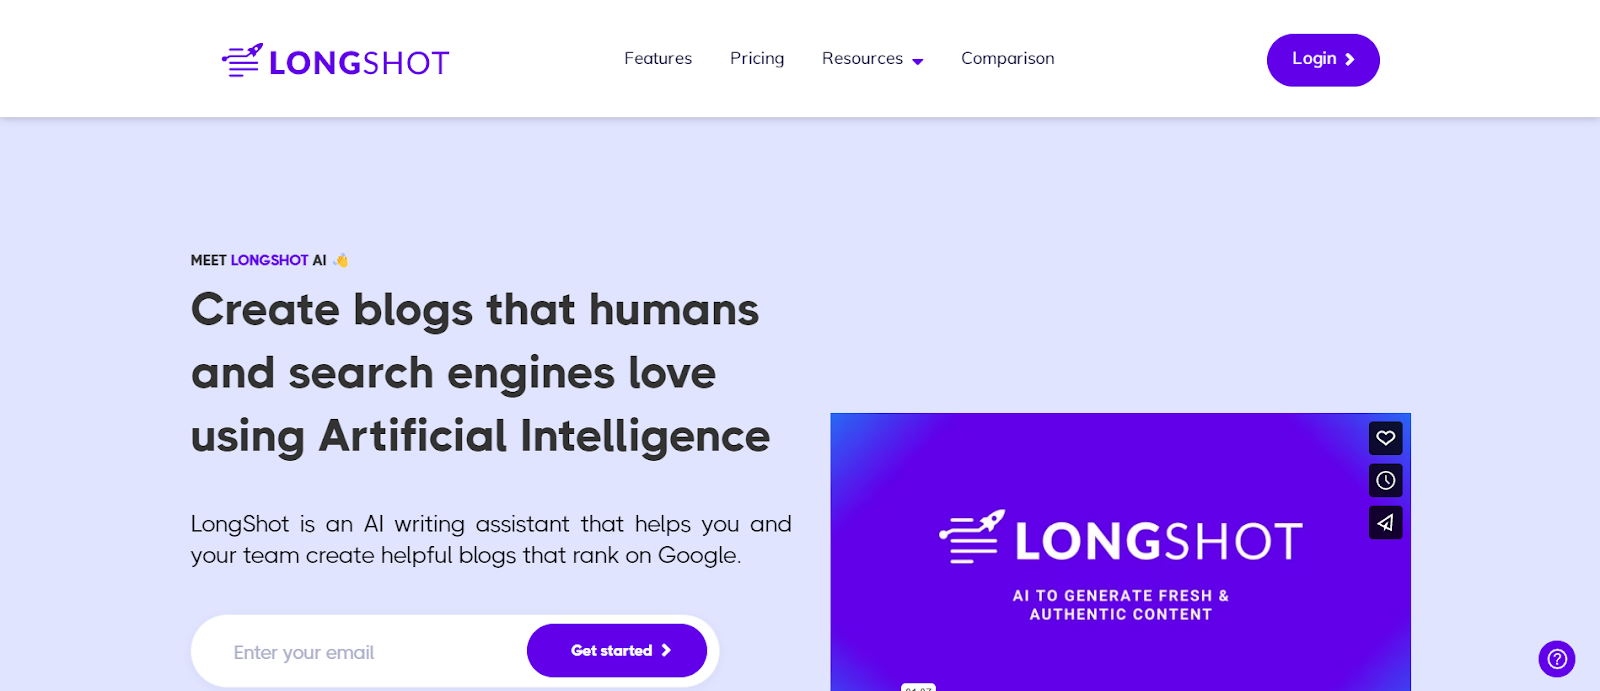 A screenshot of LongShot AI's website